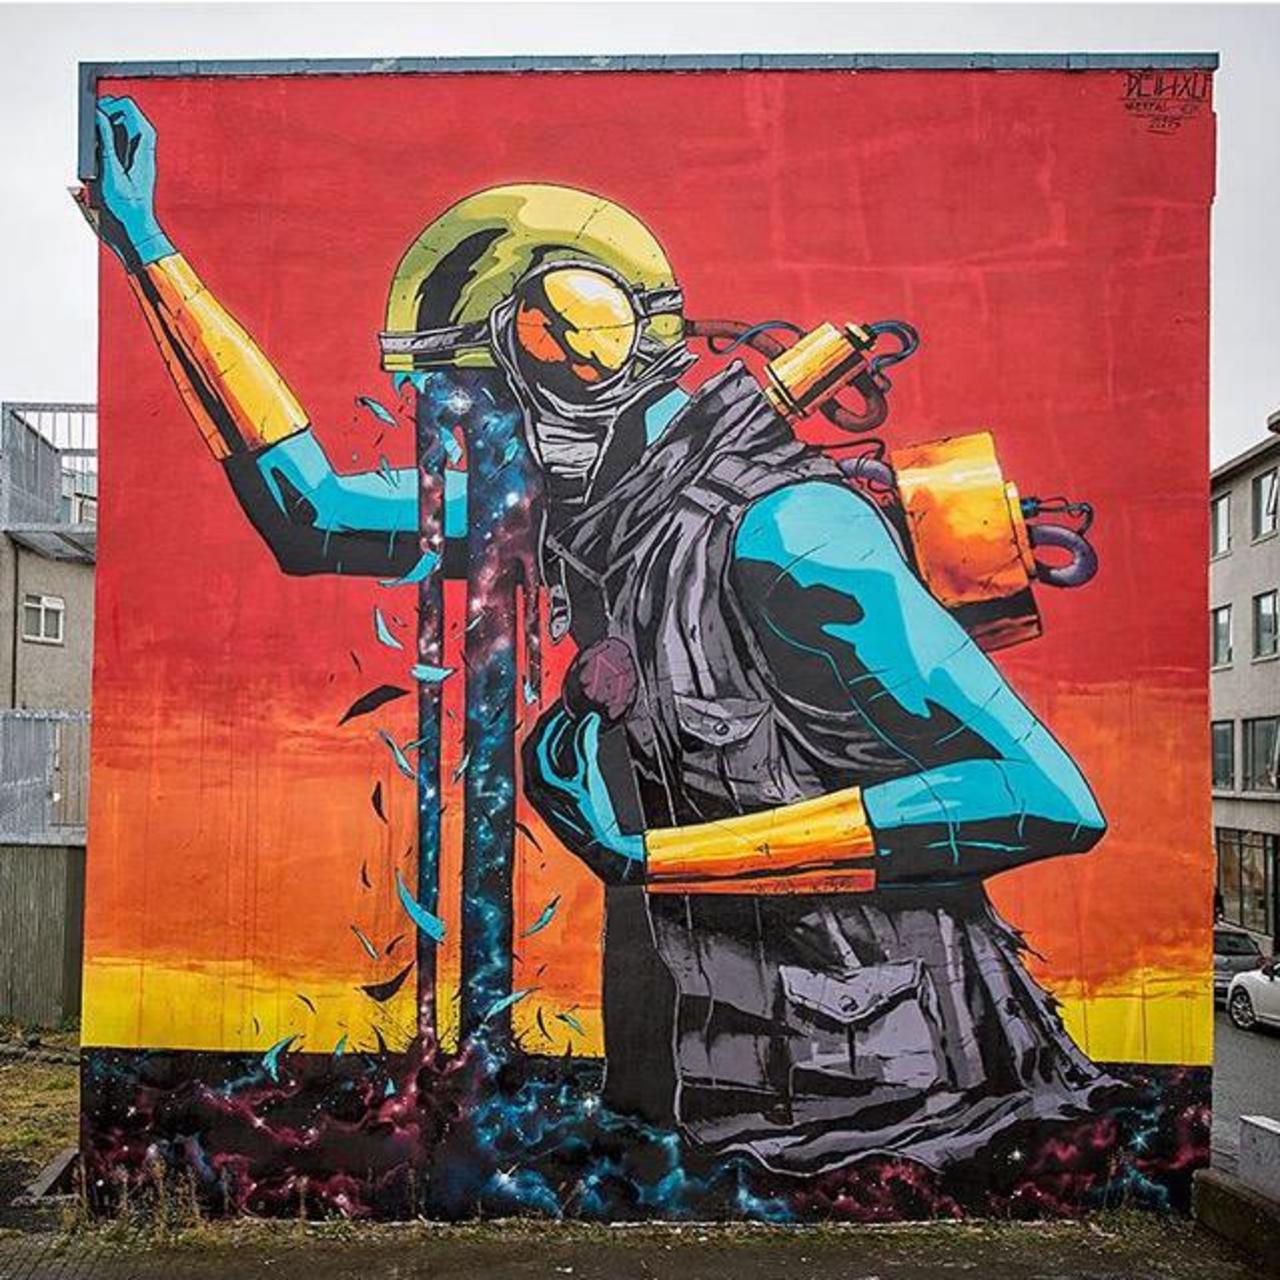 Street Art by Deih in Reykjavik 

#art #graffiti #mural #streetart https://t.co/W1qASDmSkh … … http://twitter.com/GoogleStreetArt/status/649658114984275968/photo/1/large?utm_source=fb&utm_medium=fb&utm_campaign=charlesjackso14&utm_content=649659080492060672